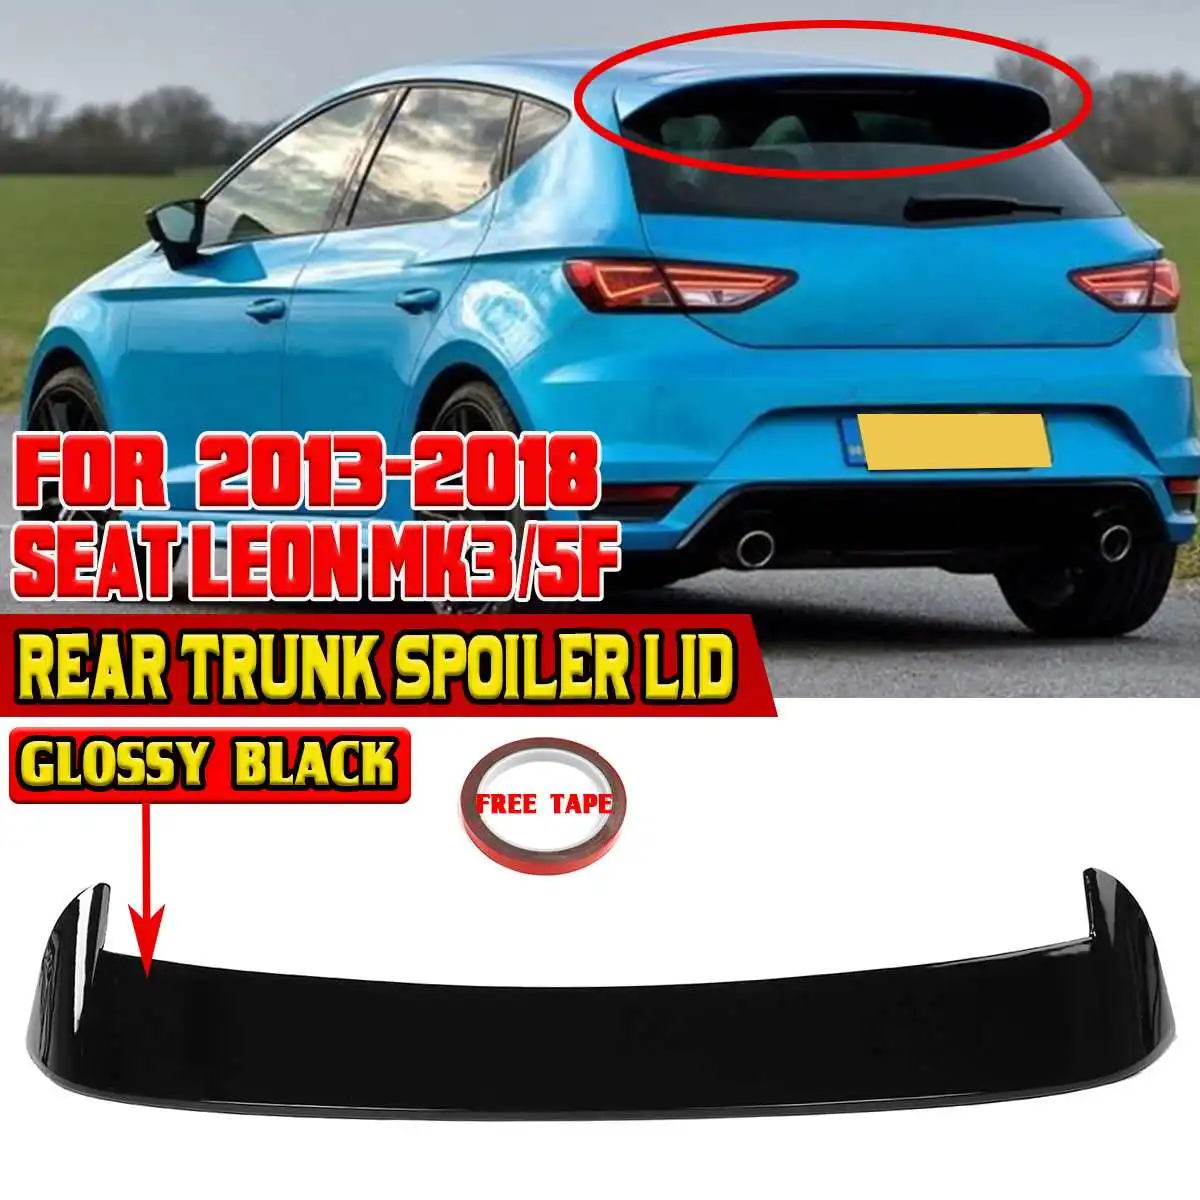 

Glossy Black Car Rear Trunk Spoiler Lip Boot Wing Lip Rear Spoiler For SEAT LEON MK3/5F 2013-2018 Rear Roof Lip Spoiler Wing